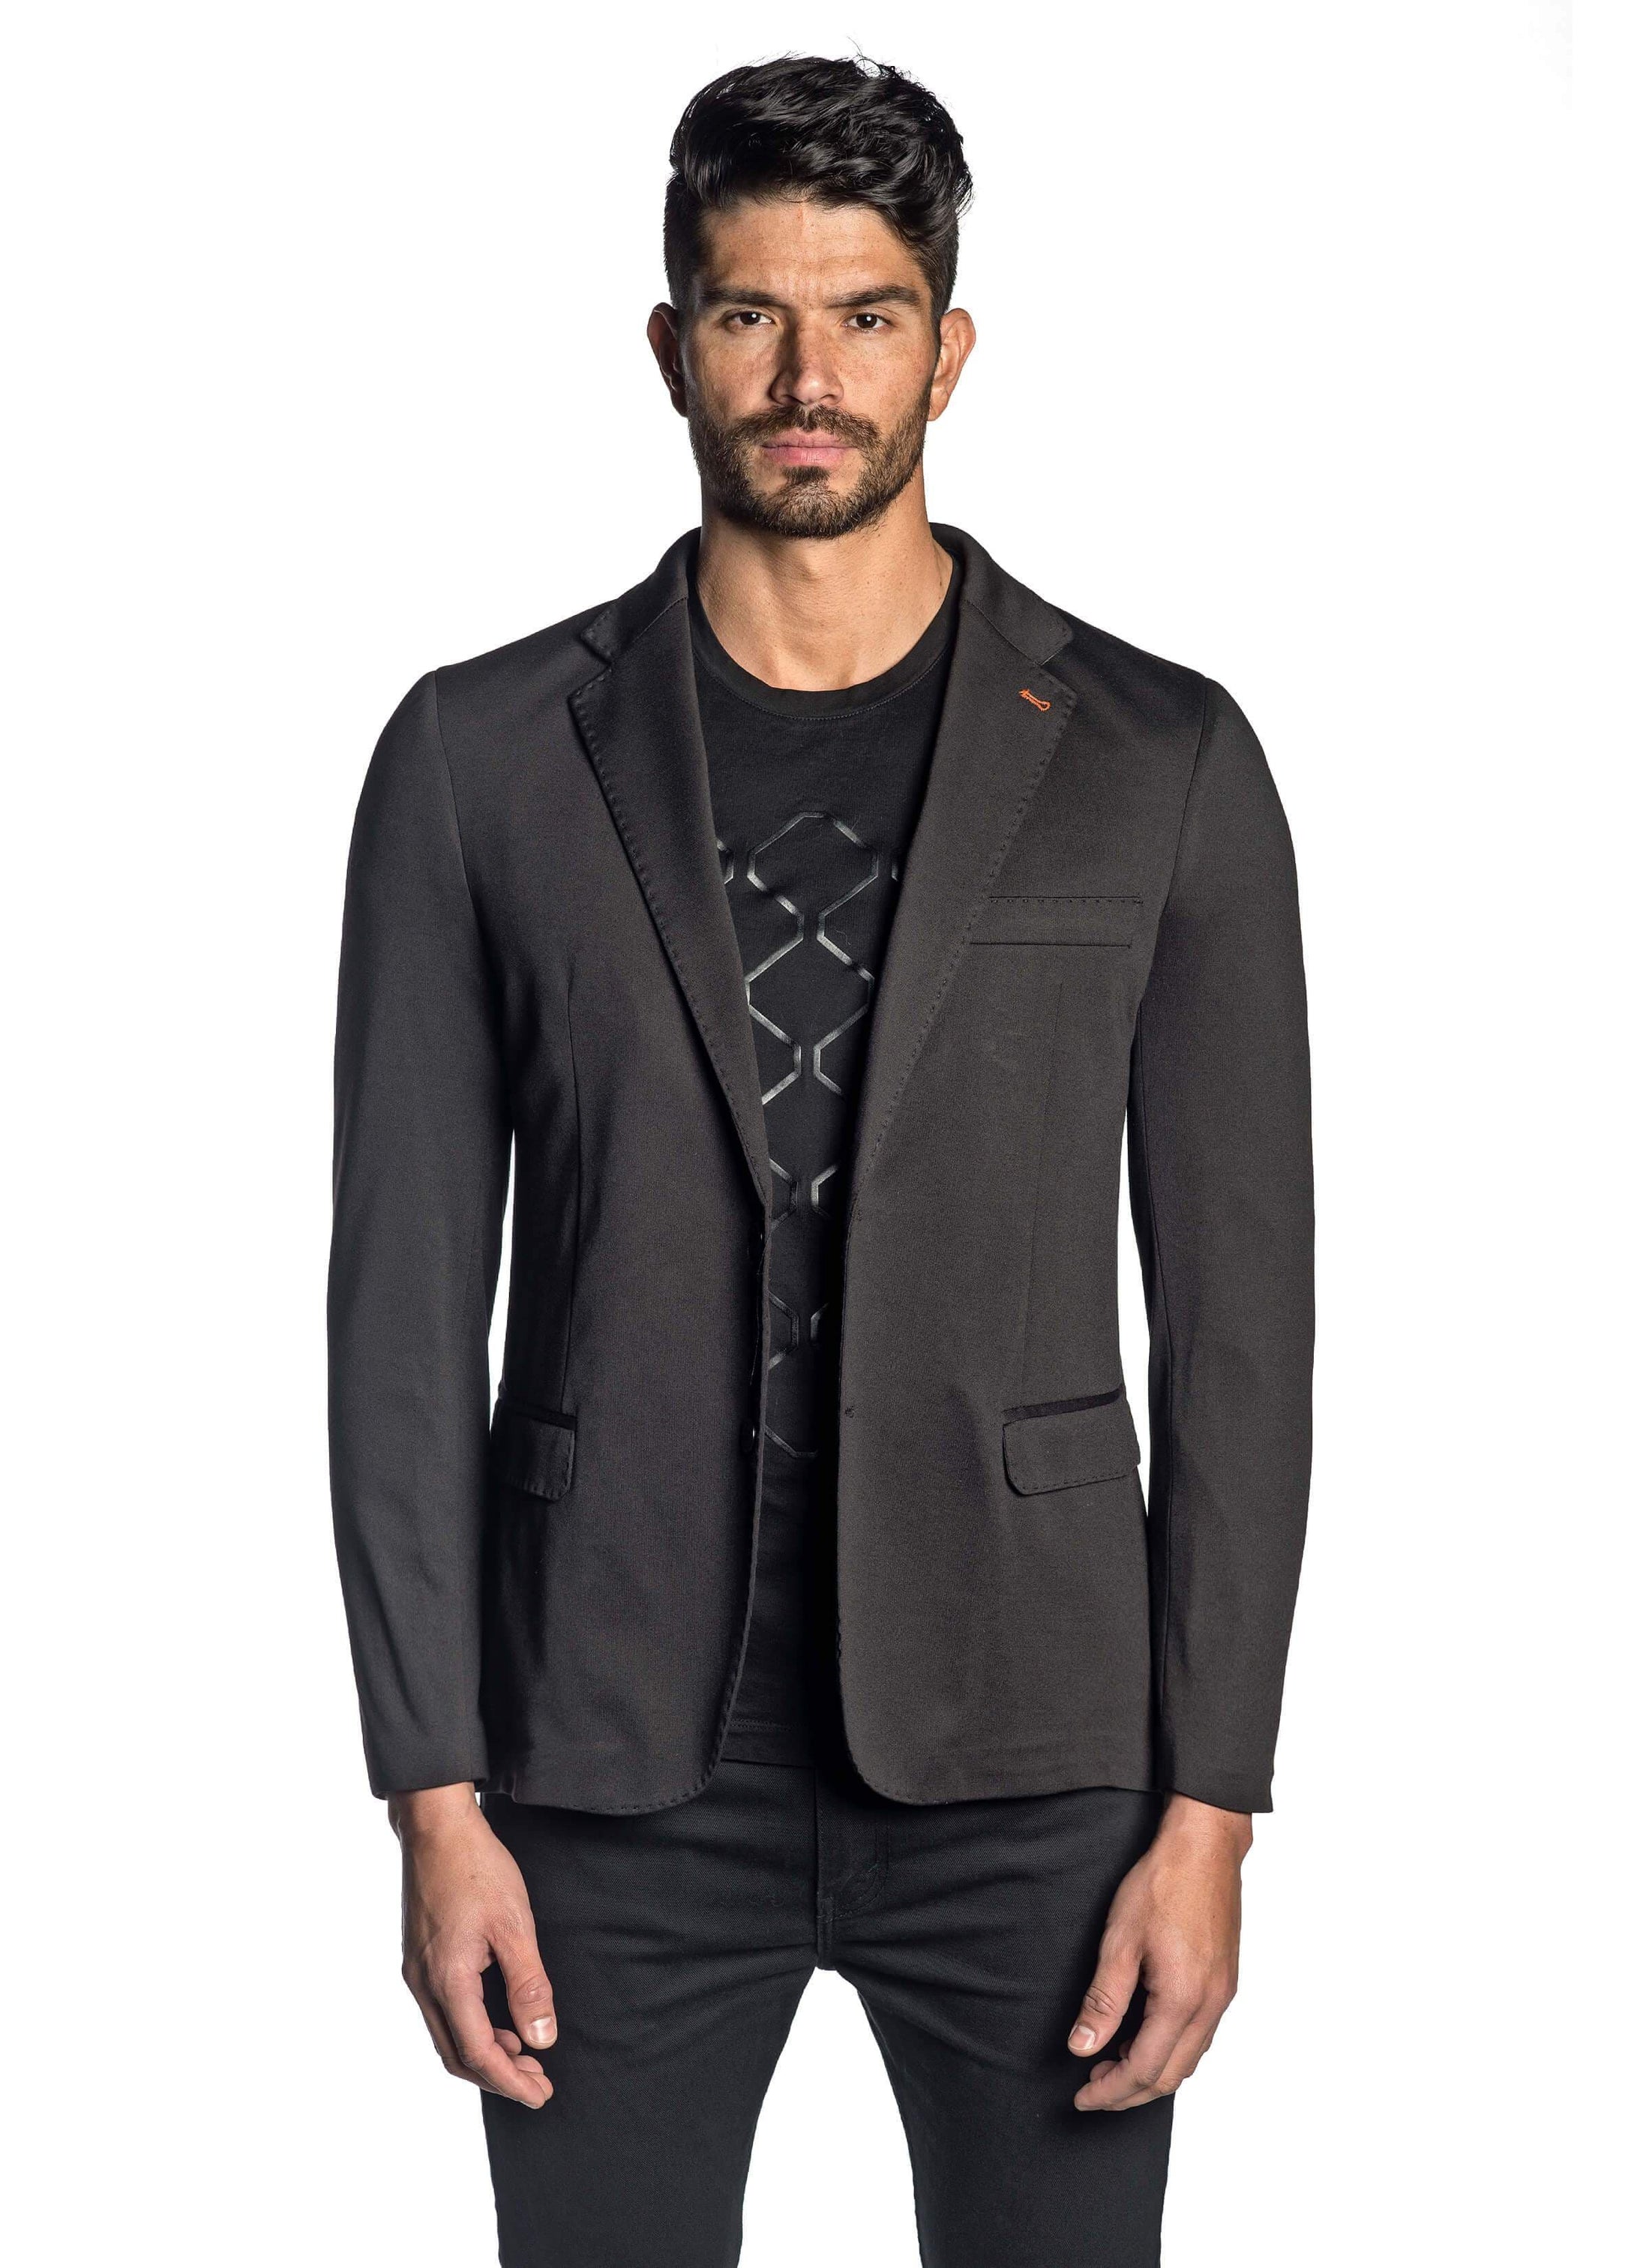 Black Solid Knit Blazer for Men LAMBO-001 | Jared Lang Official